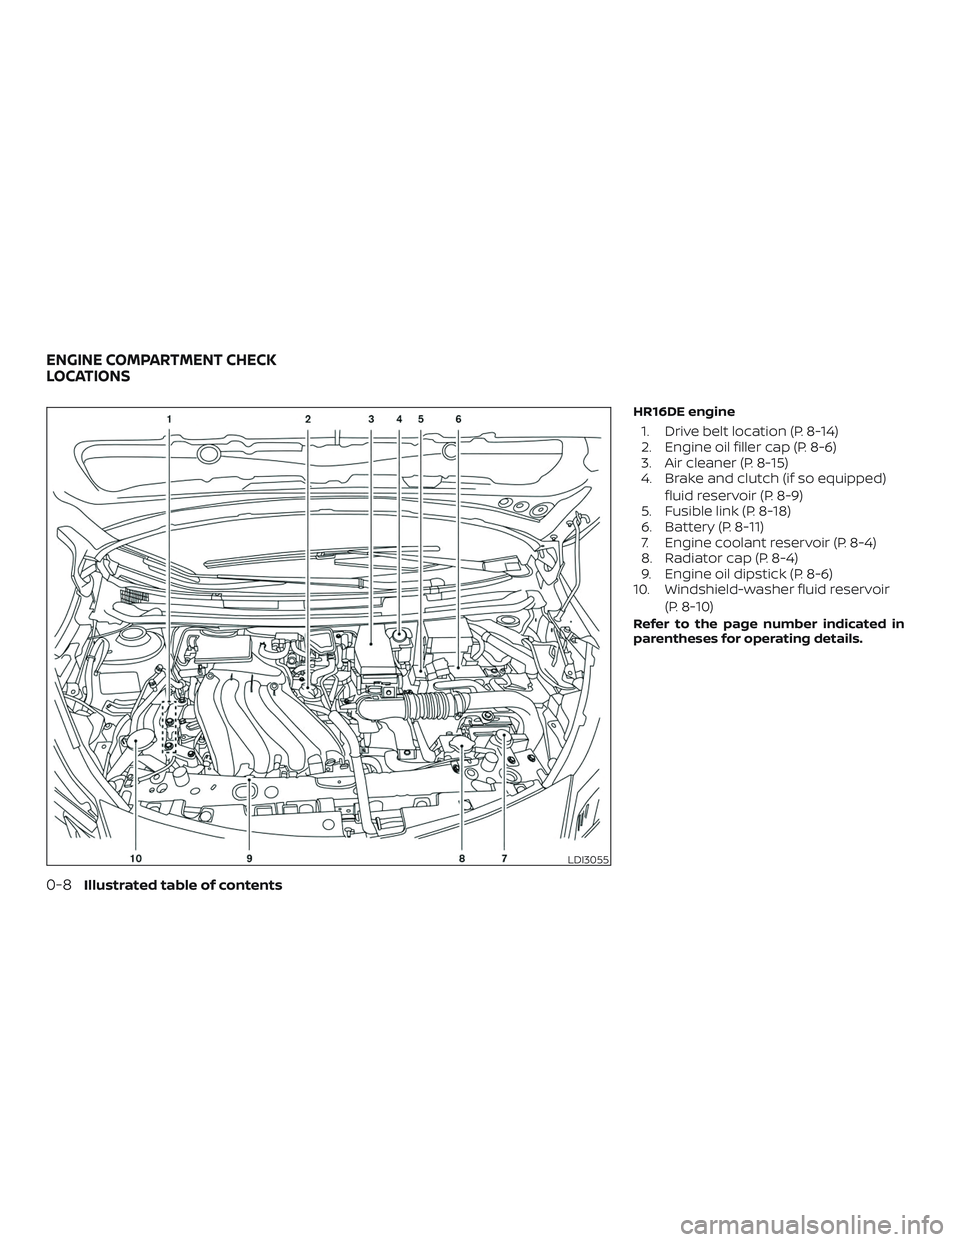 NISSAN VERSA NOTE 2018  Owner´s Manual HR16DE engine
1. Drive belt location (P. 8-14)
2. Engine oil filler cap (P. 8-6)
3. Air cleaner (P. 8-15)
4. Brake and clutch (if so equipped)fluid reservoir (P. 8-9)
5. Fusible link (P. 8-18)
6. Batt